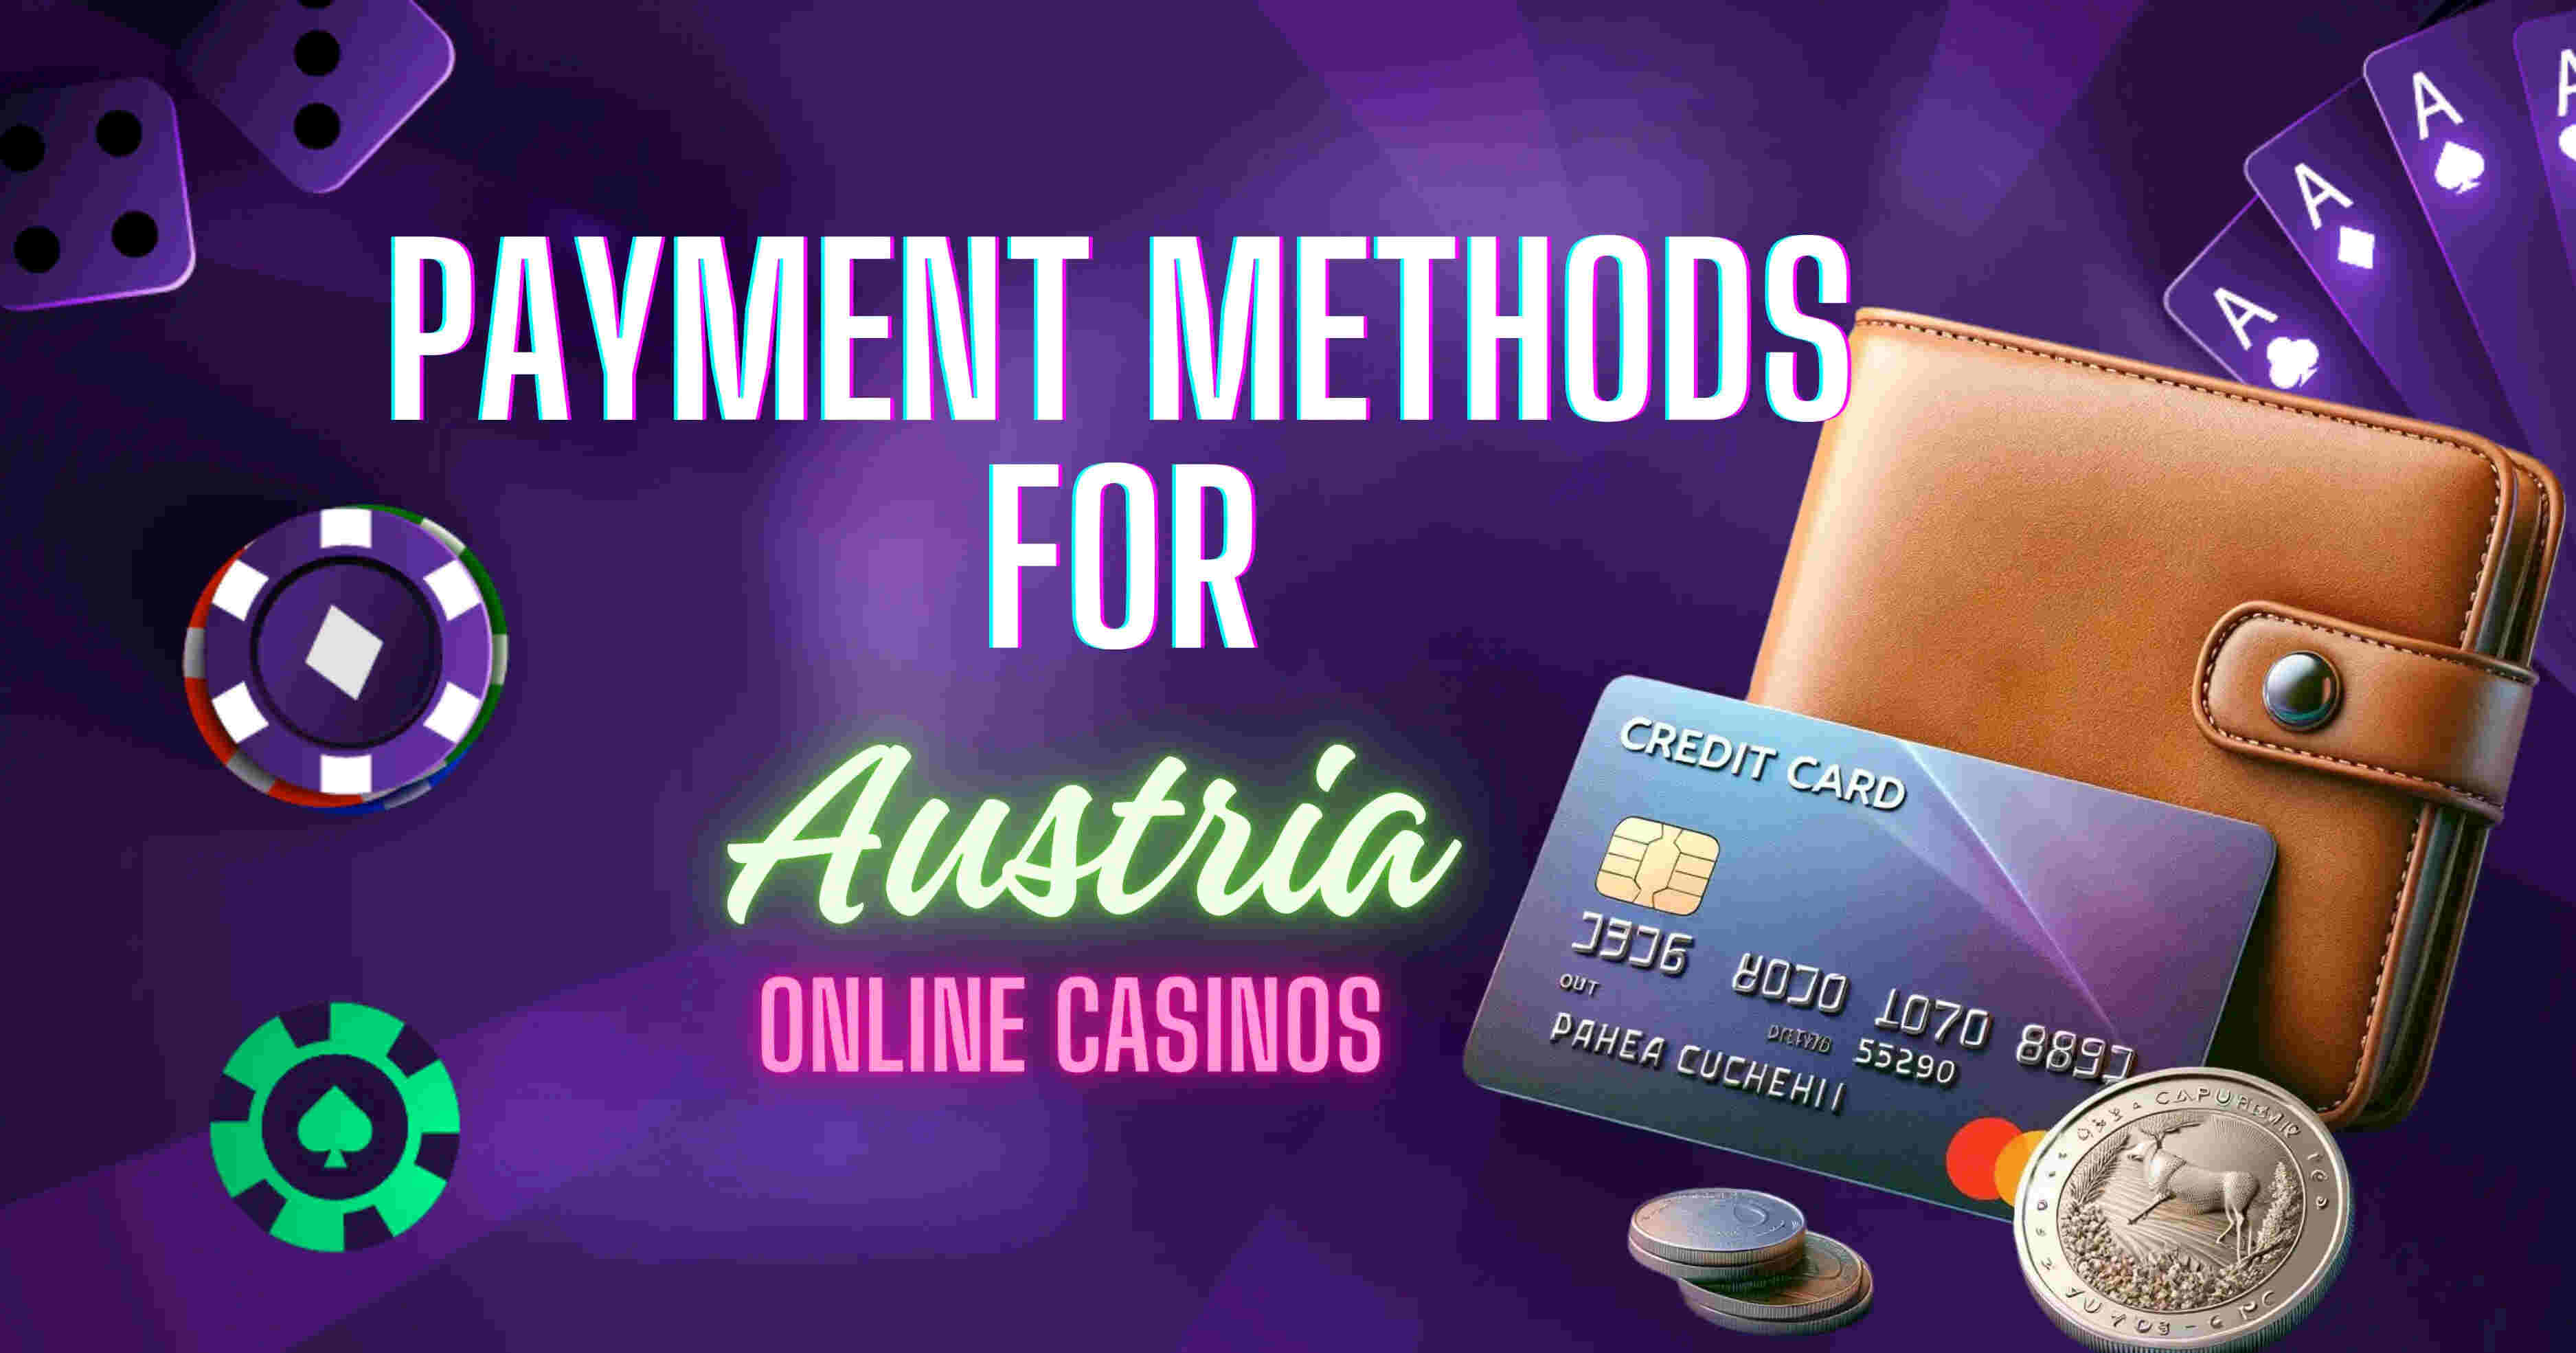 Austria online casinos